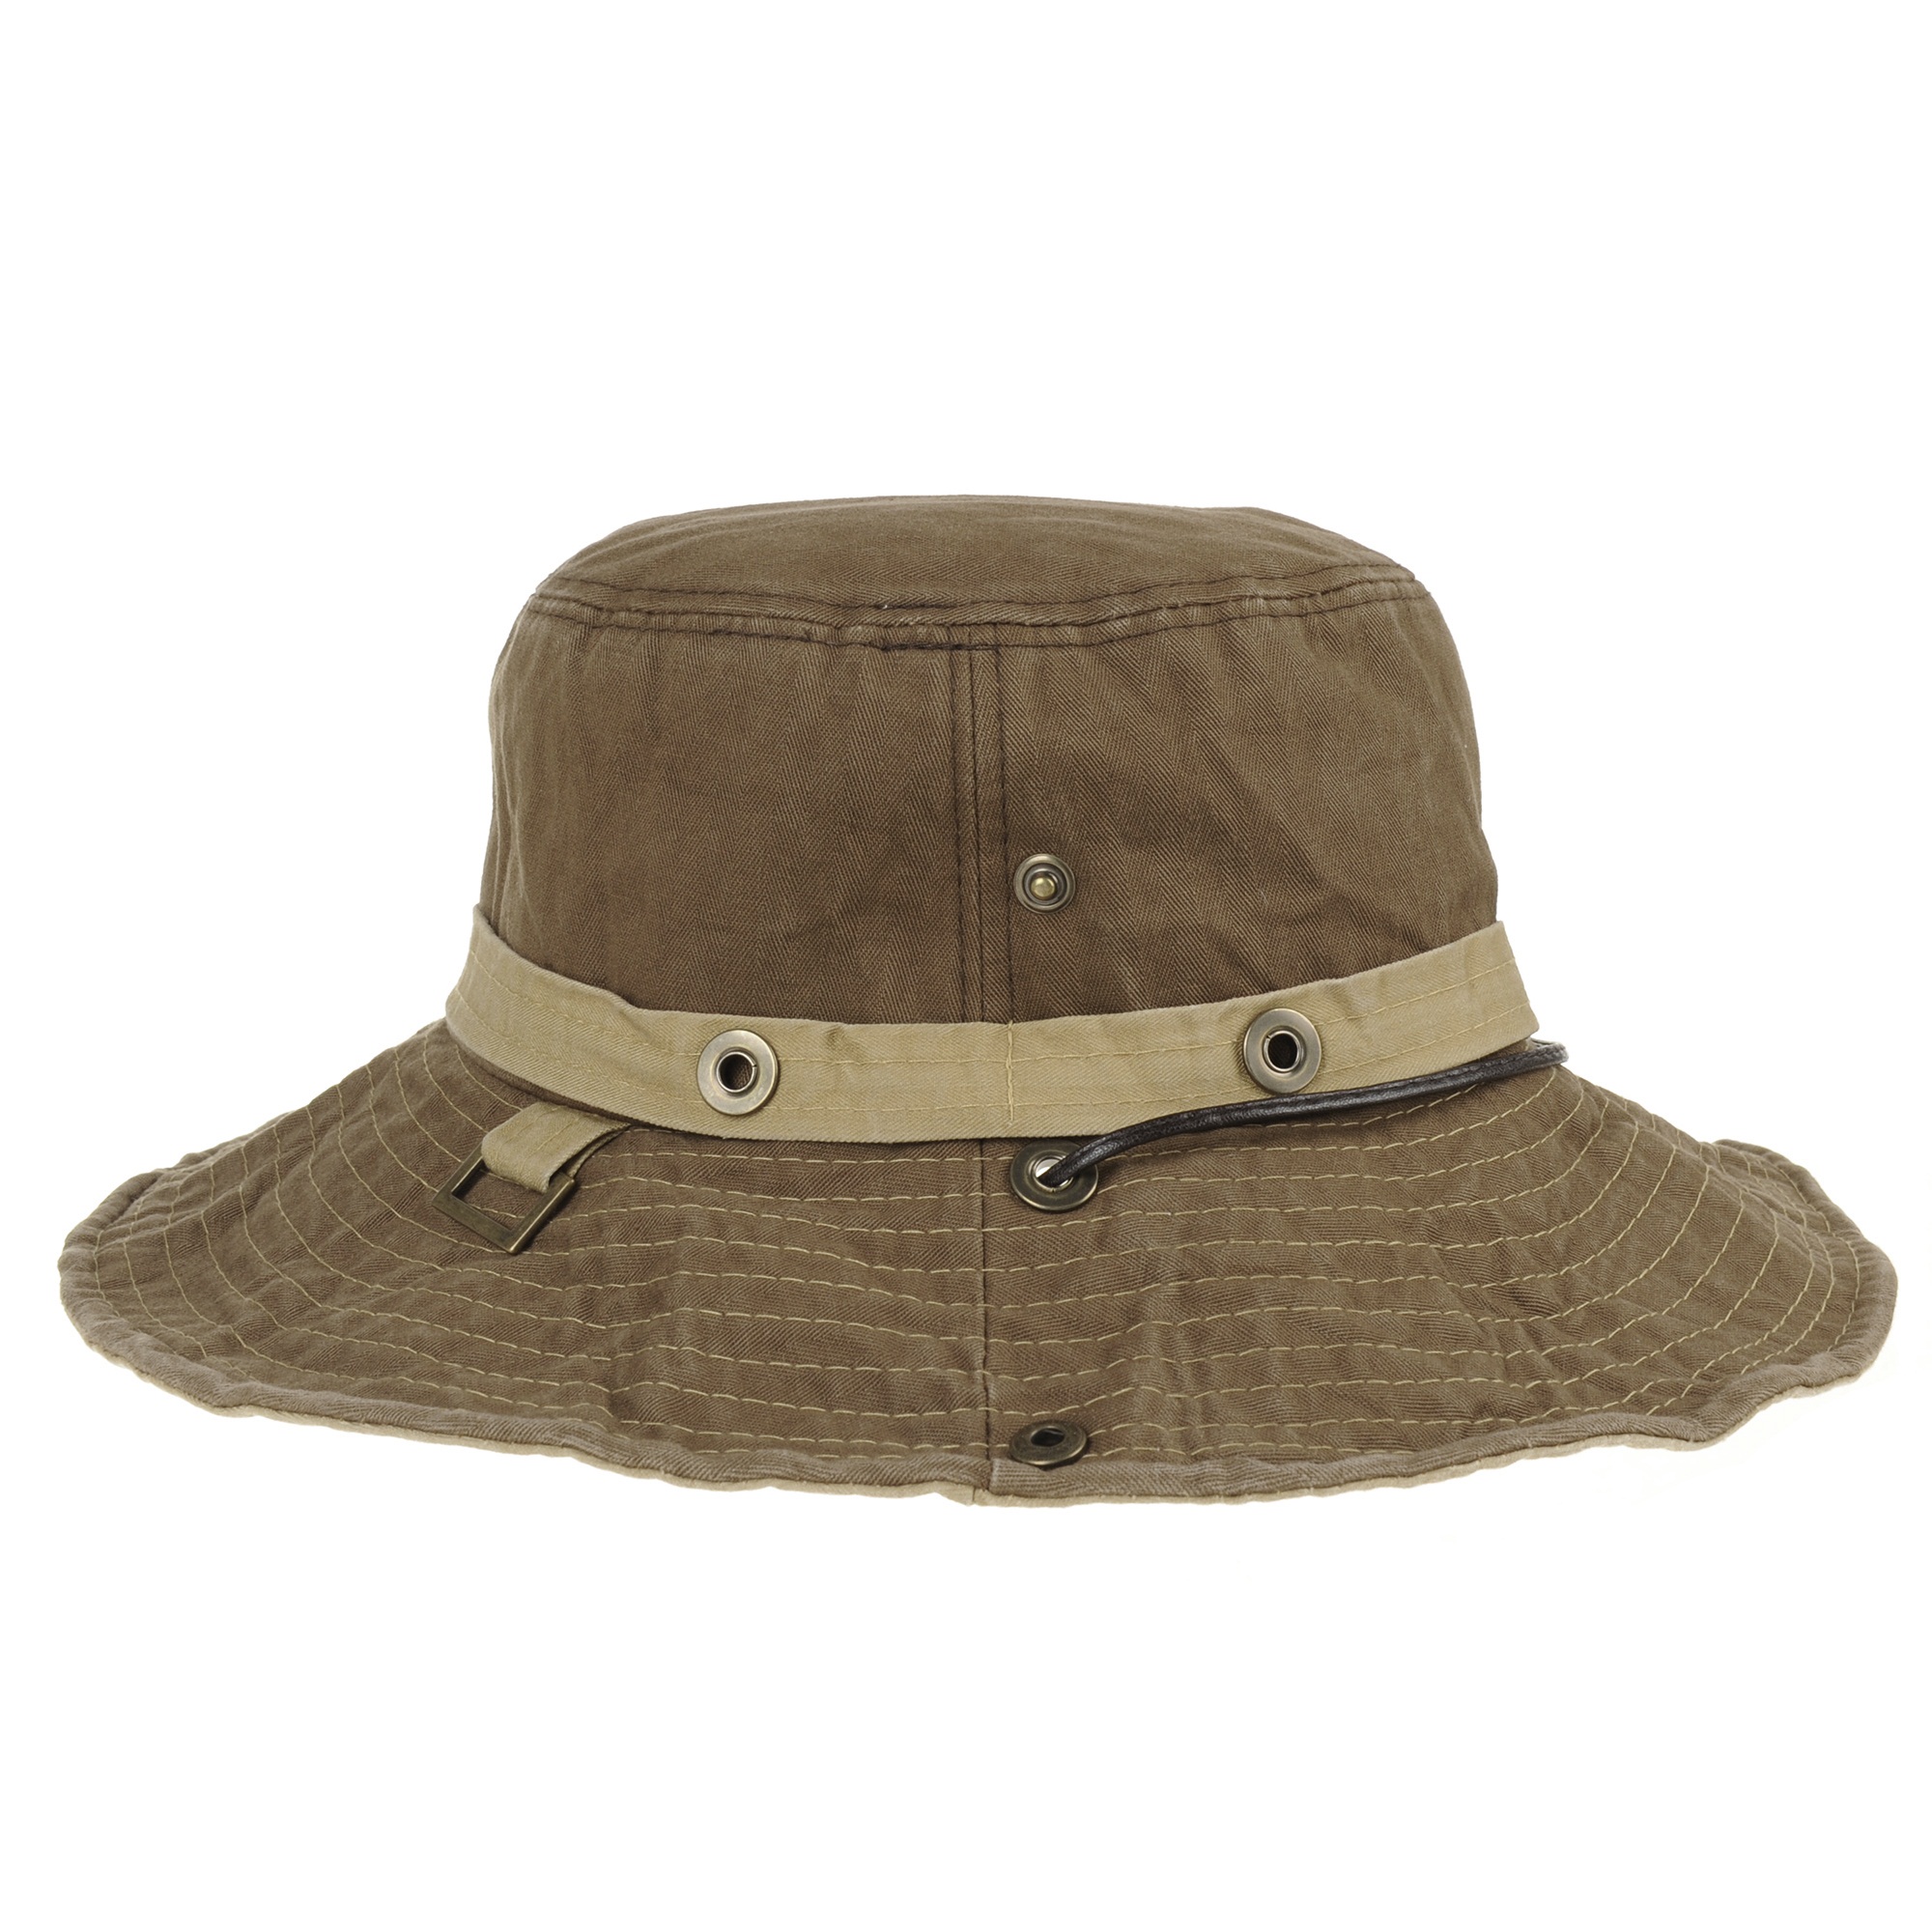 WITHMOONS Boonie Bush Hats Wide Brim Denim Camouflage Side Snap KR2190 ...